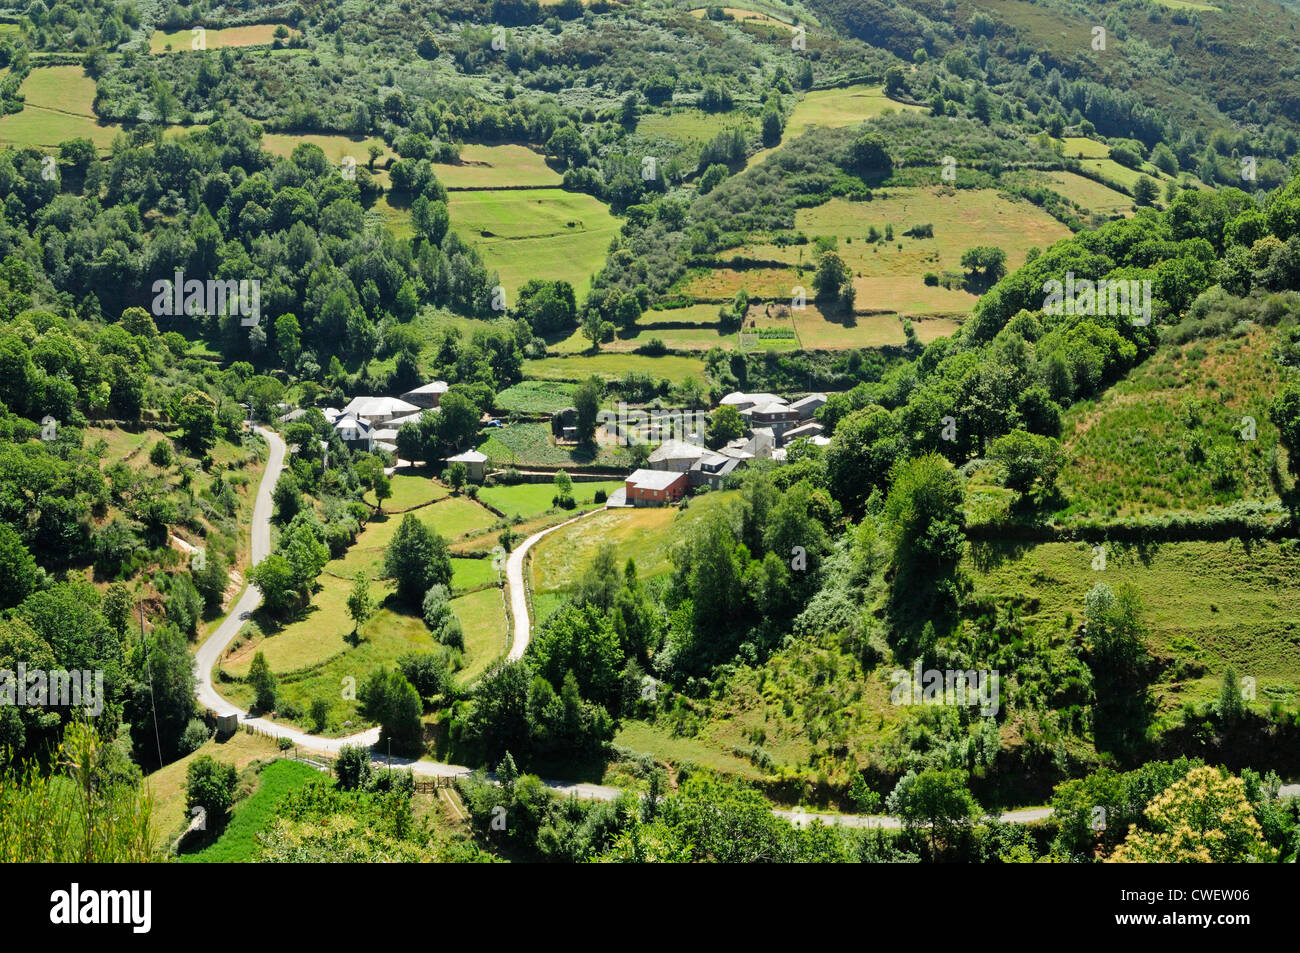 Village and landscape in Romeor, Folgoso do Courel, Galicia, Spain Stock Photo